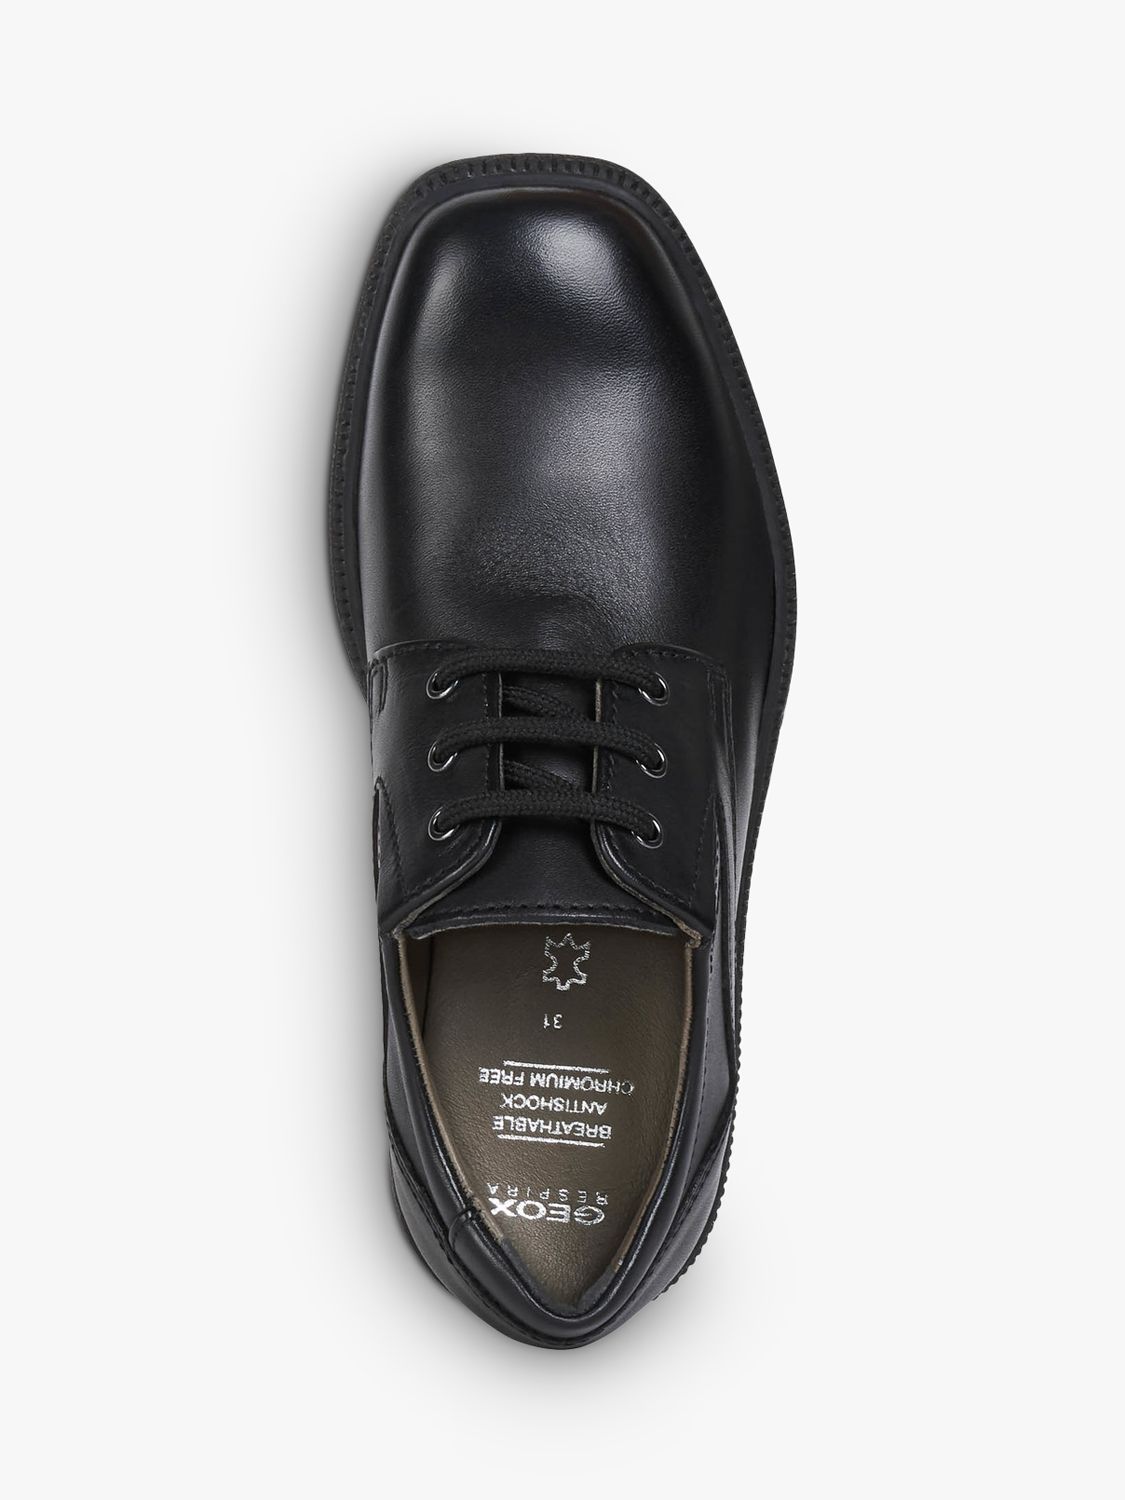 Dólar prefacio novato Geox Kids' Federico Laced Shoes, Black at John Lewis & Partners